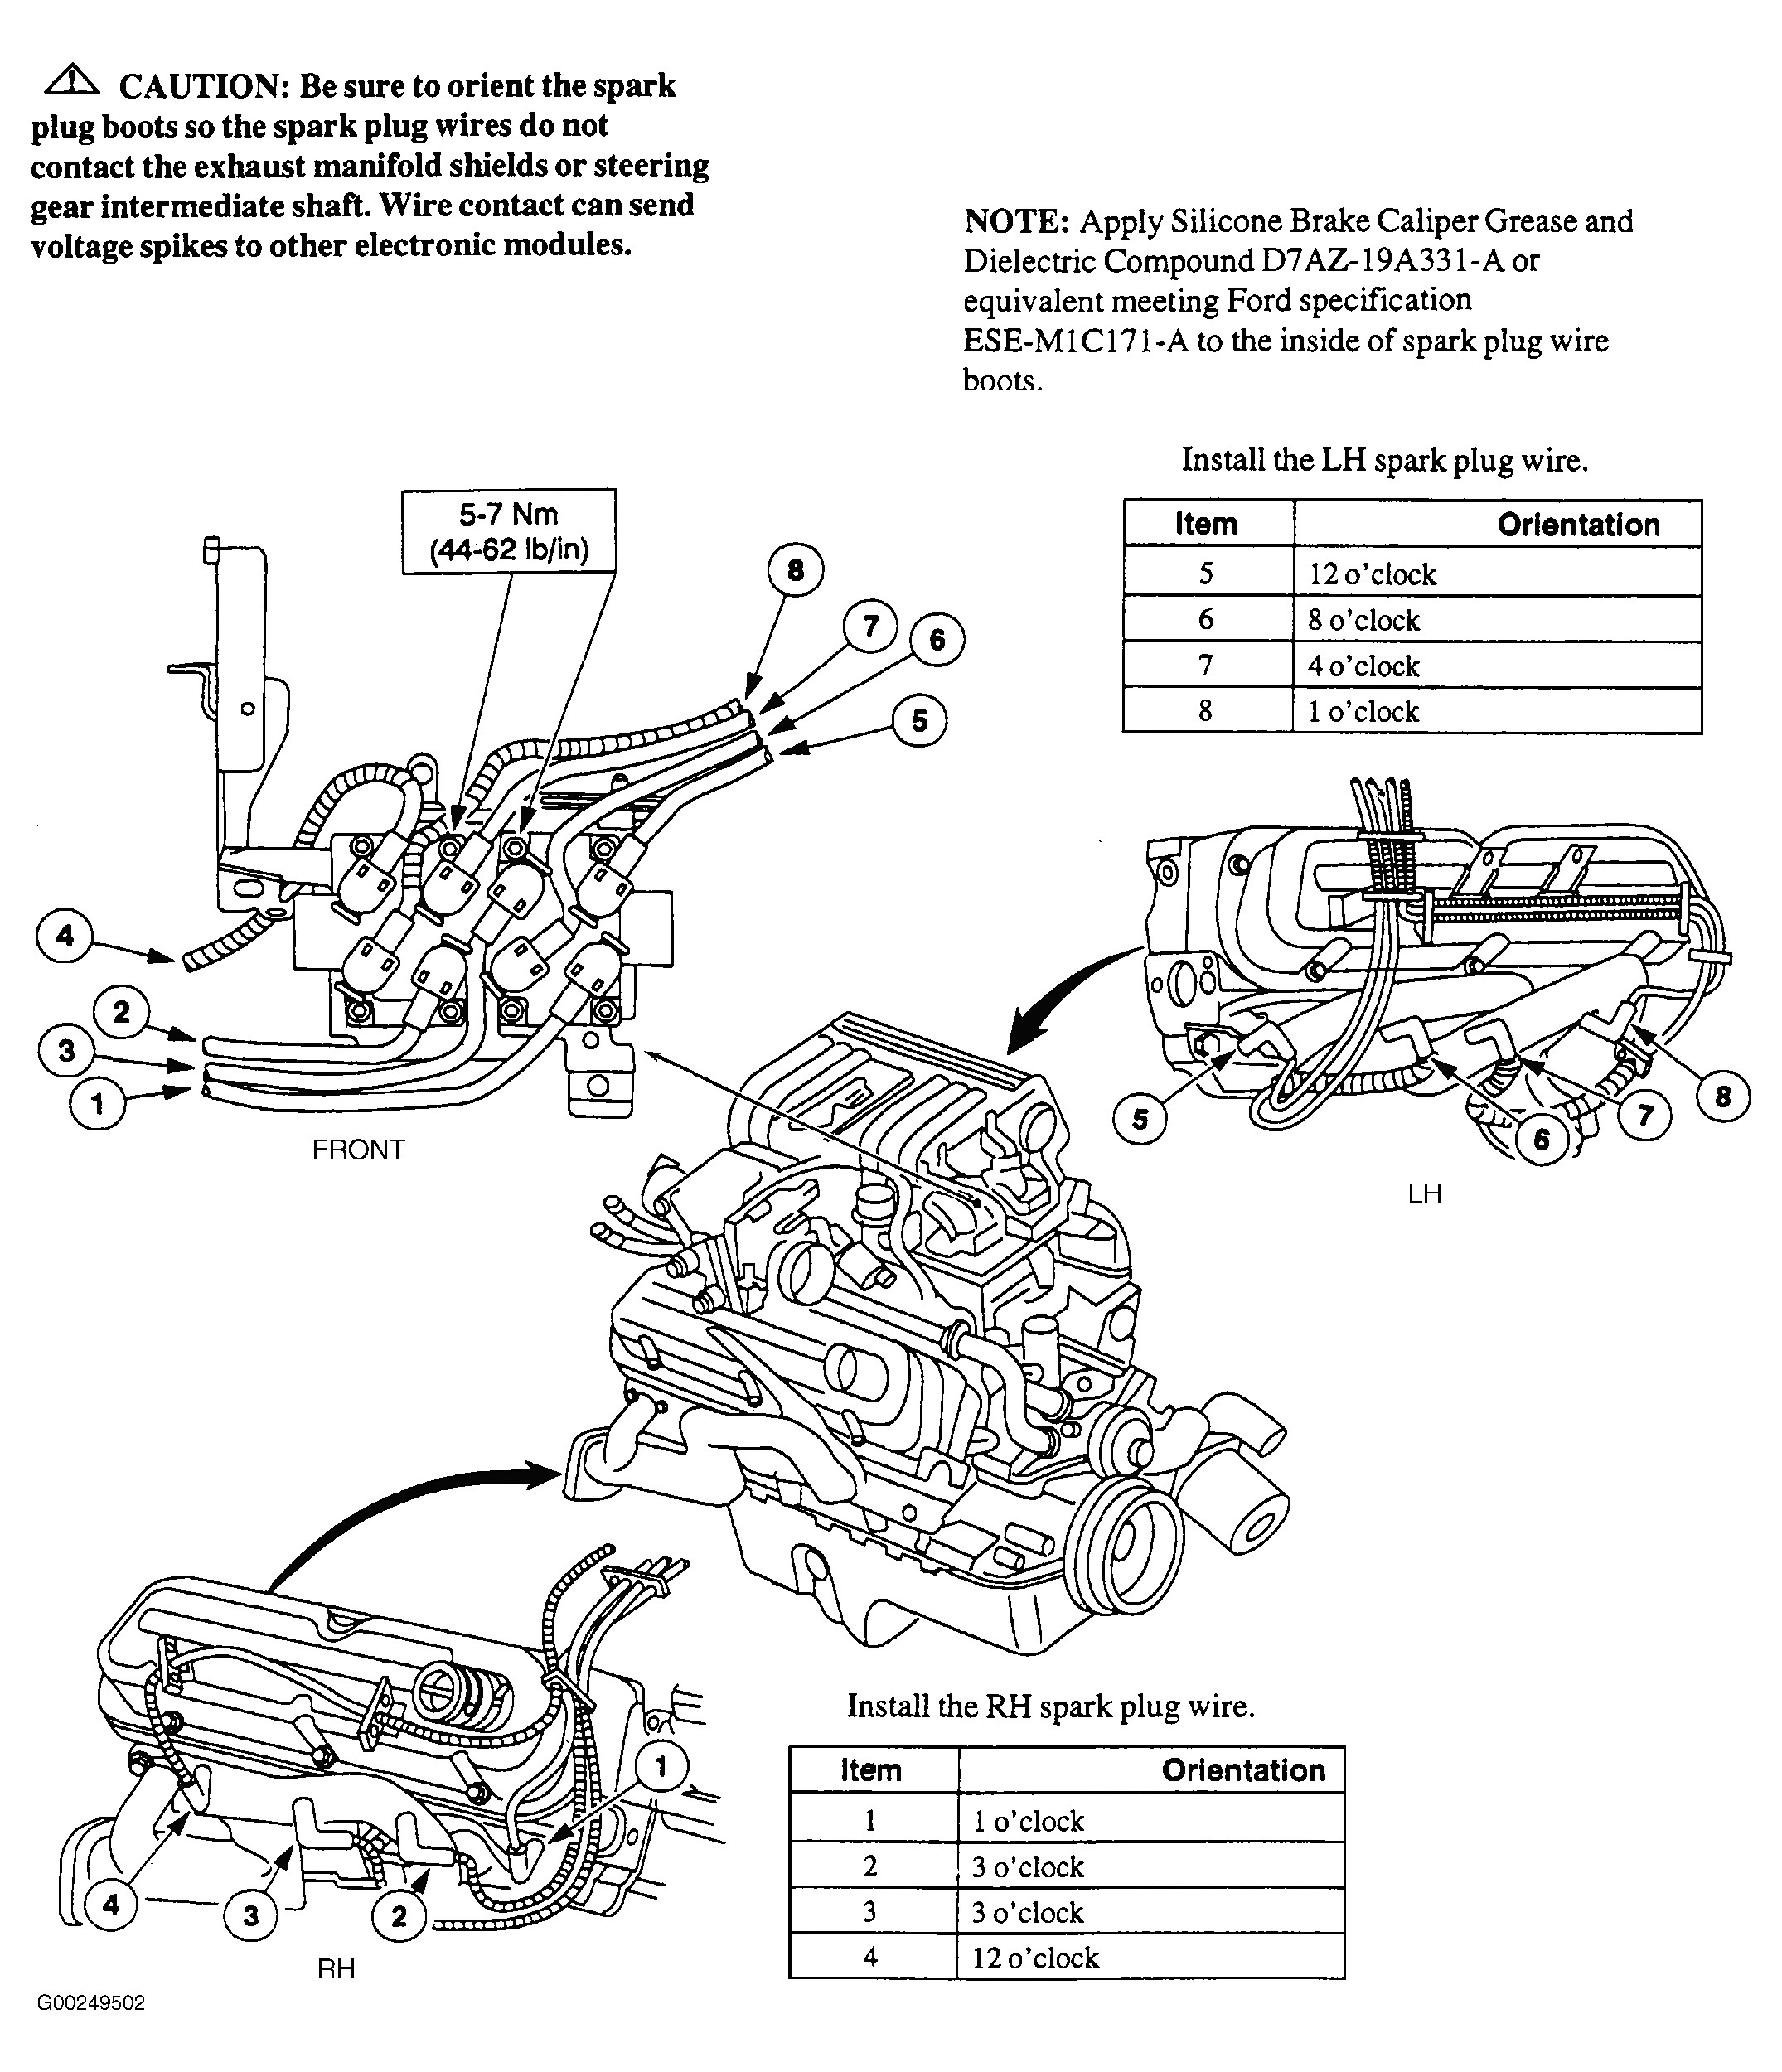 350 Engine Firing order Diagram Chevy 350 Hei Spark Plug Wiring Diagram Distributor Marvelous Model Of 350 Engine Firing order Diagram